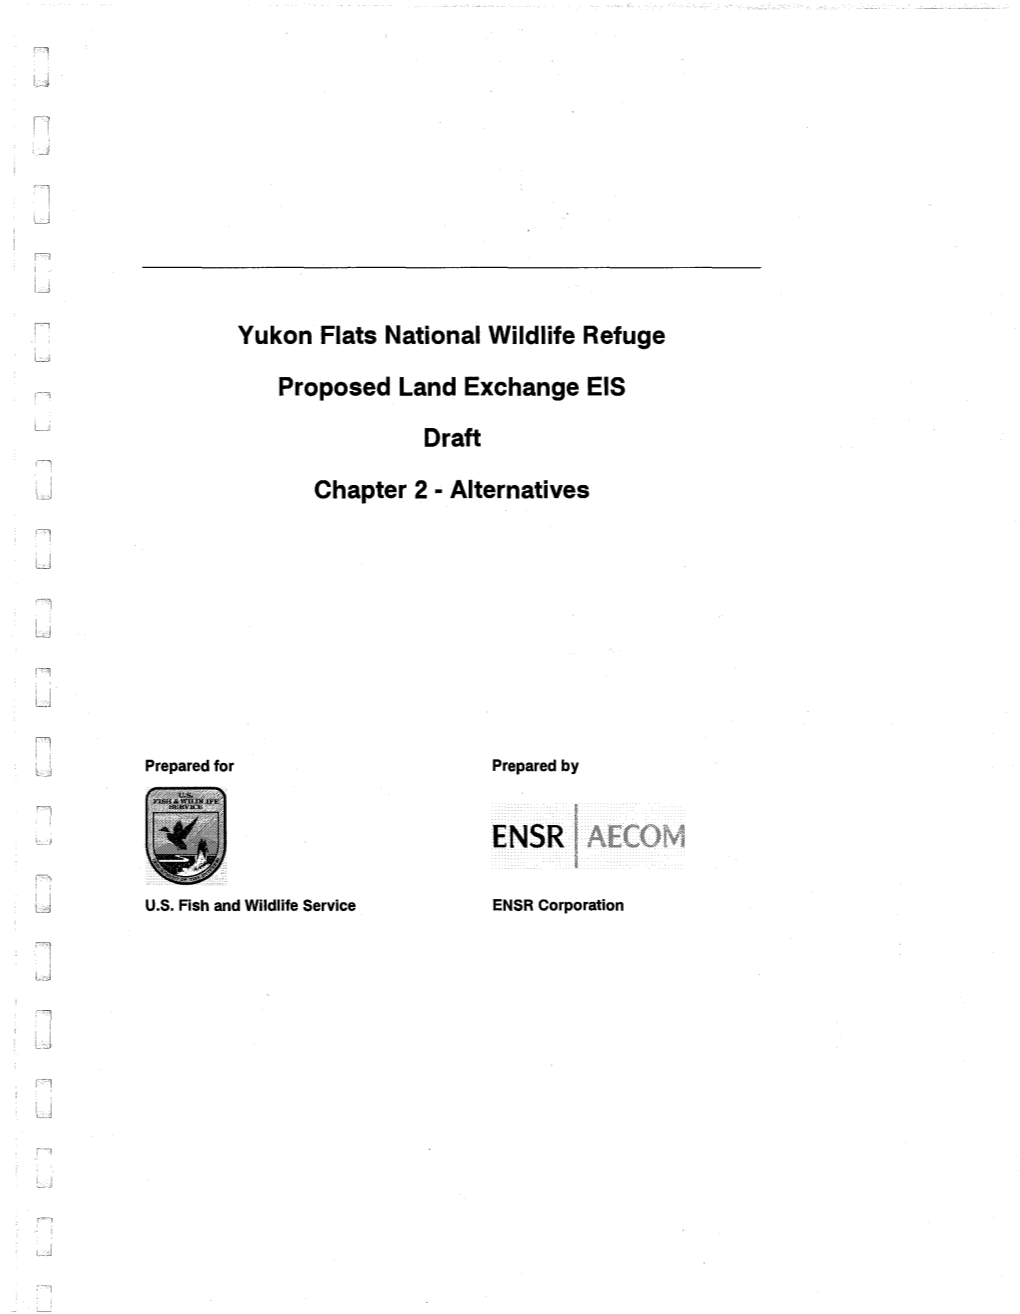 Yukon Flats National Wildlife Refuge Proposed Land Exchange EIS, Final, Public Scoping Summary Report